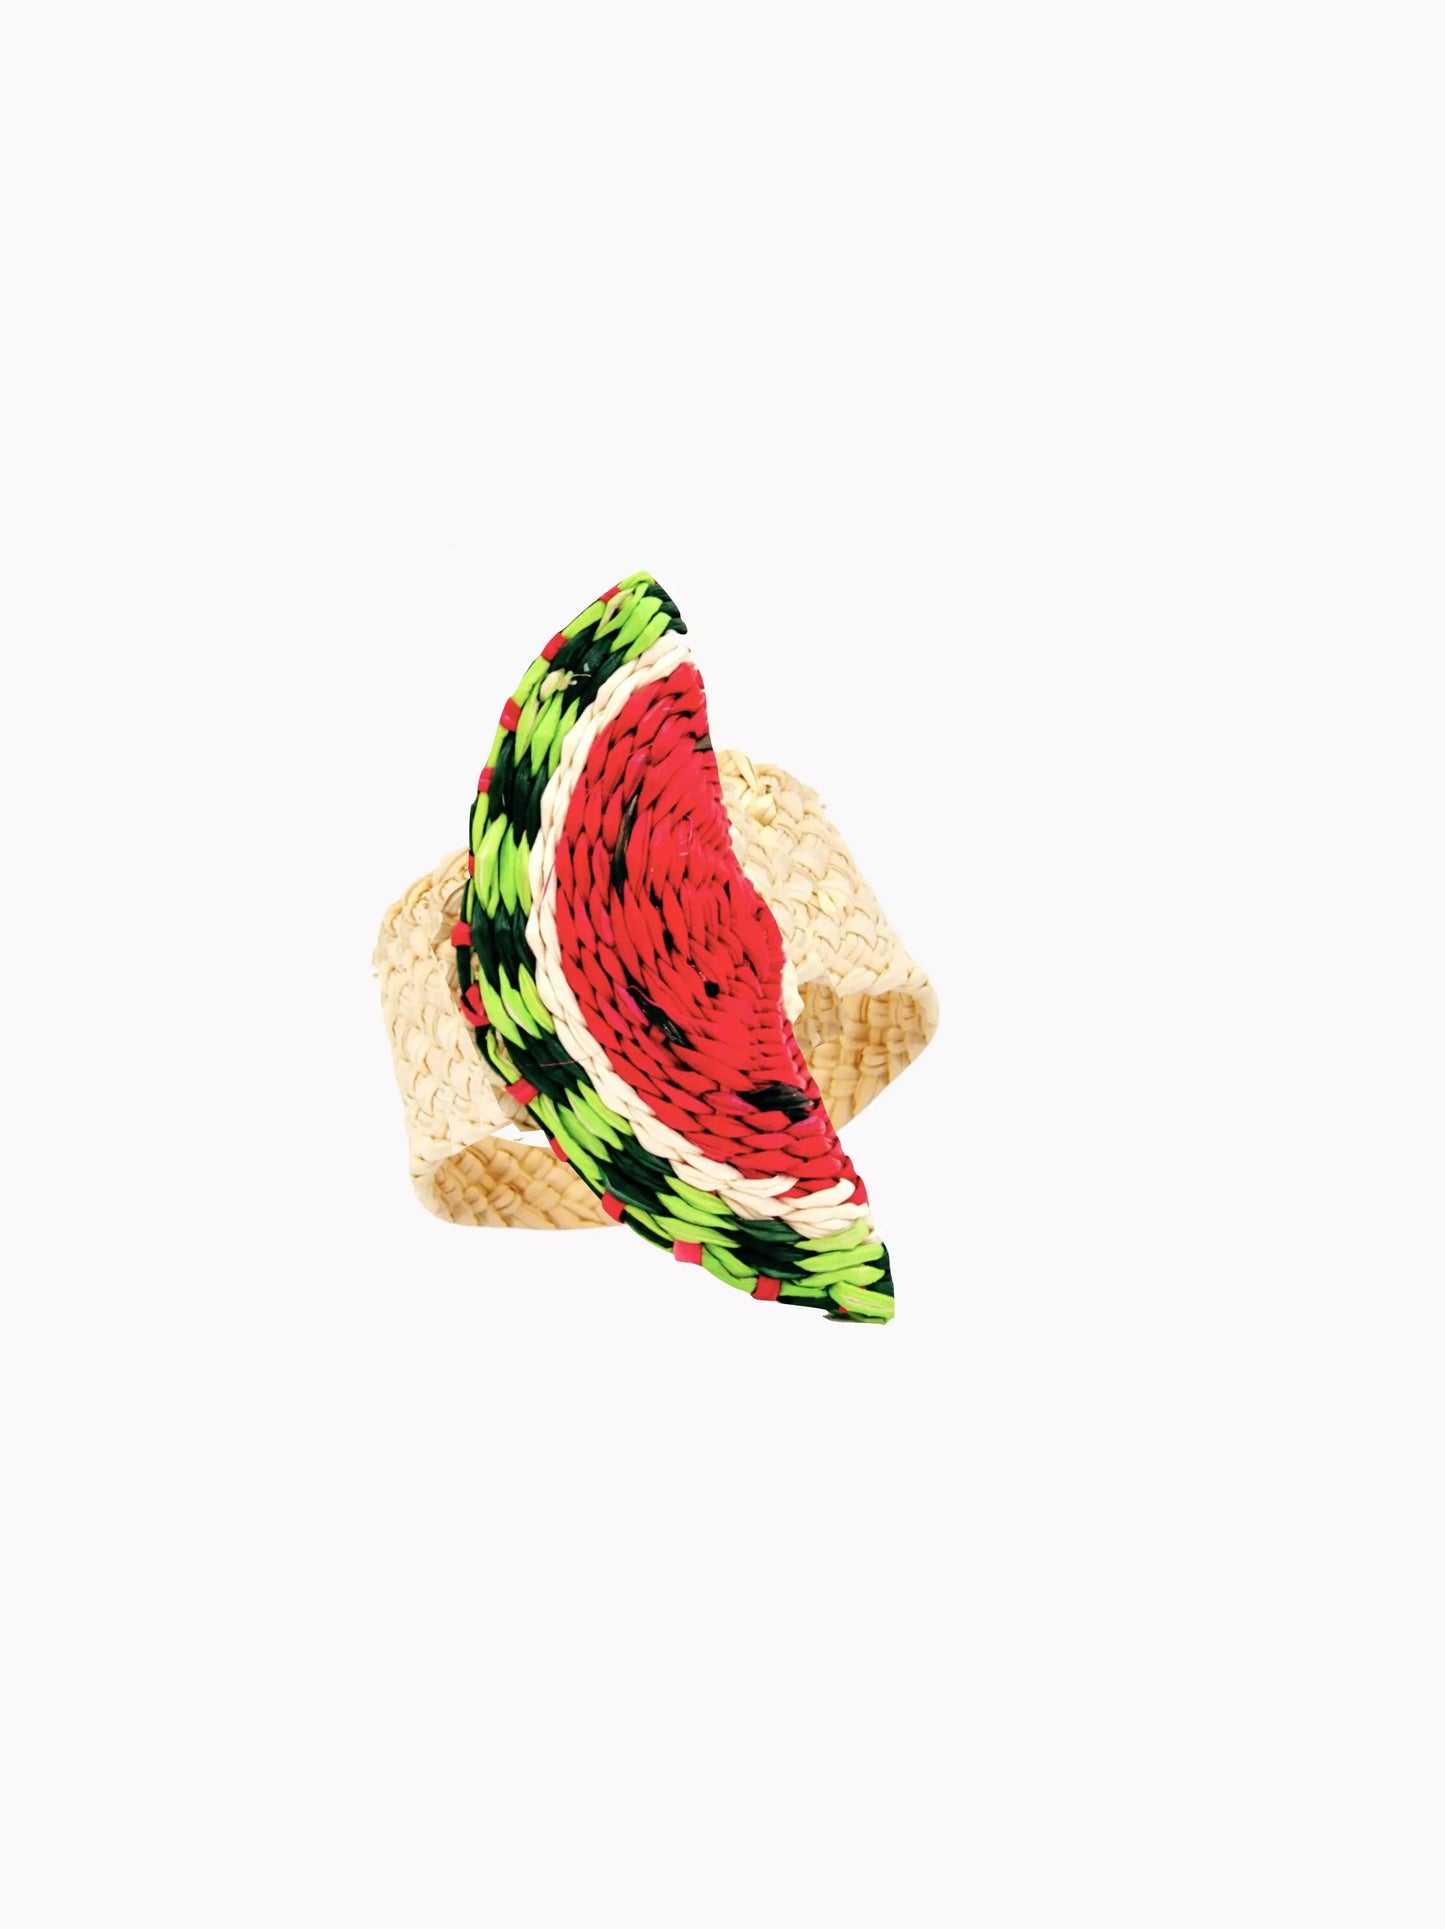 Woven Straw Watermelon Napkin Rings Set of 4